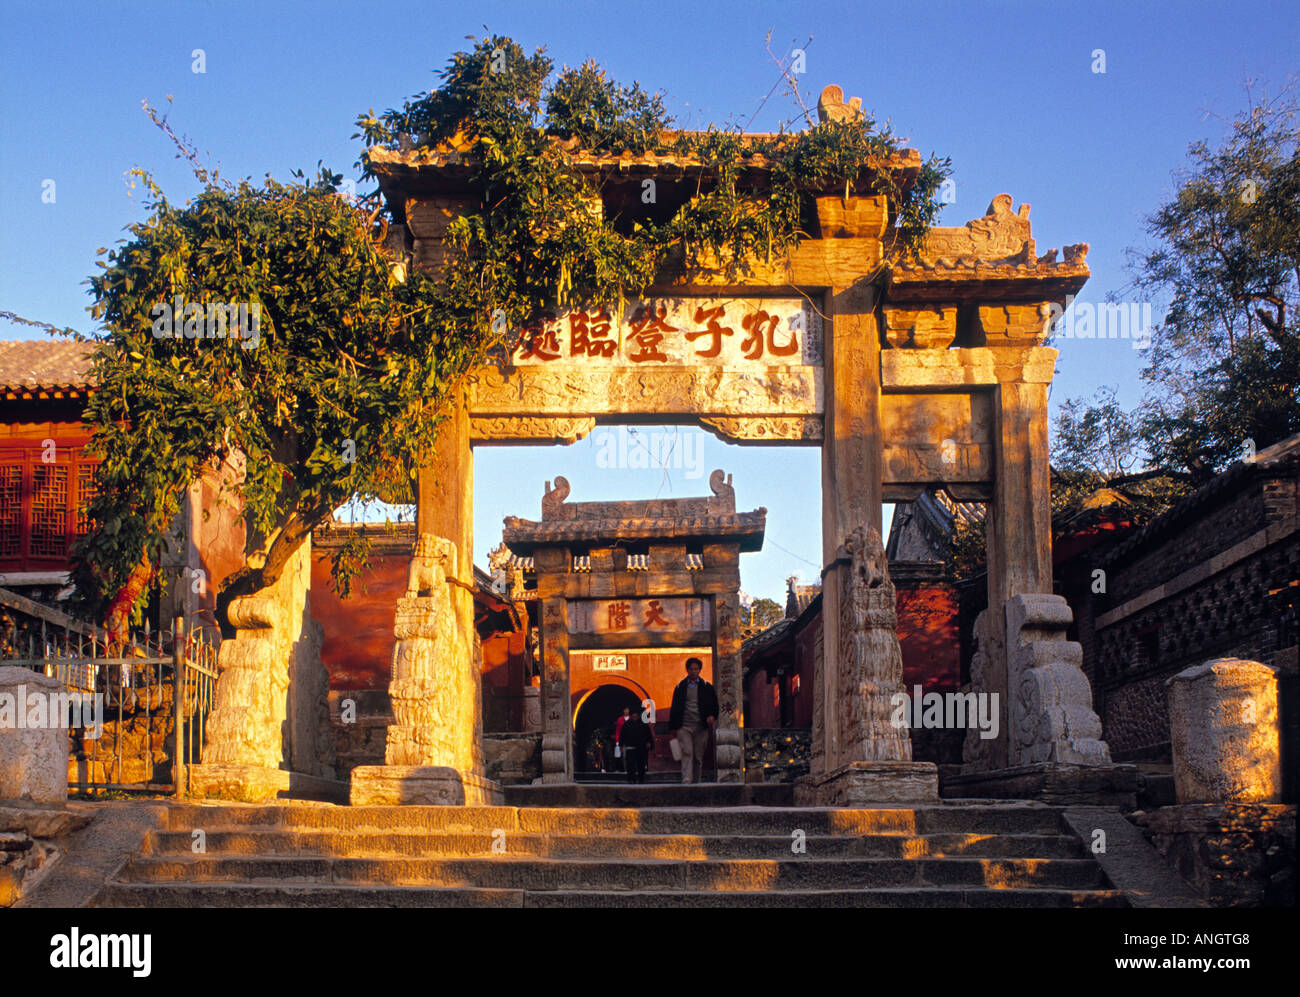 Stone archway, Tai'an, Shandong province, China Stock Photo